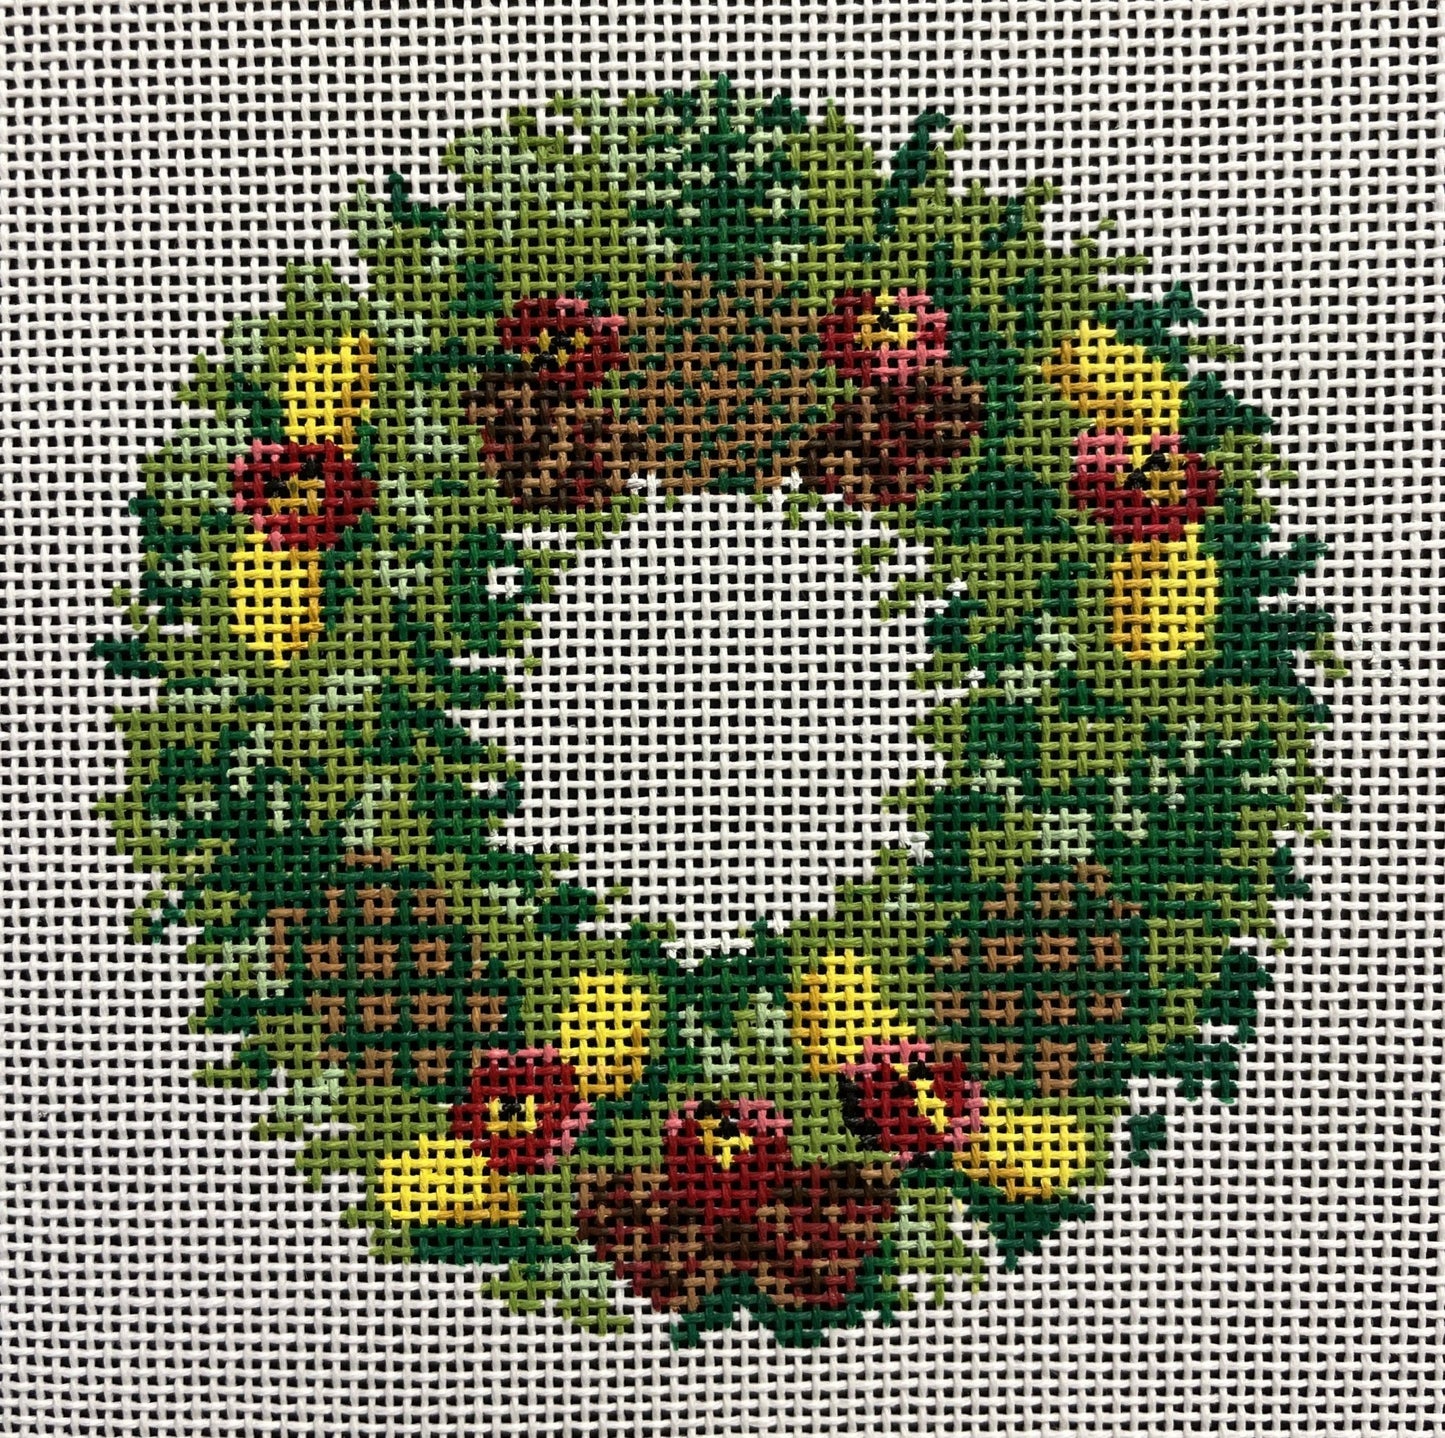 Williamsburg Wreath - The Flying Needles